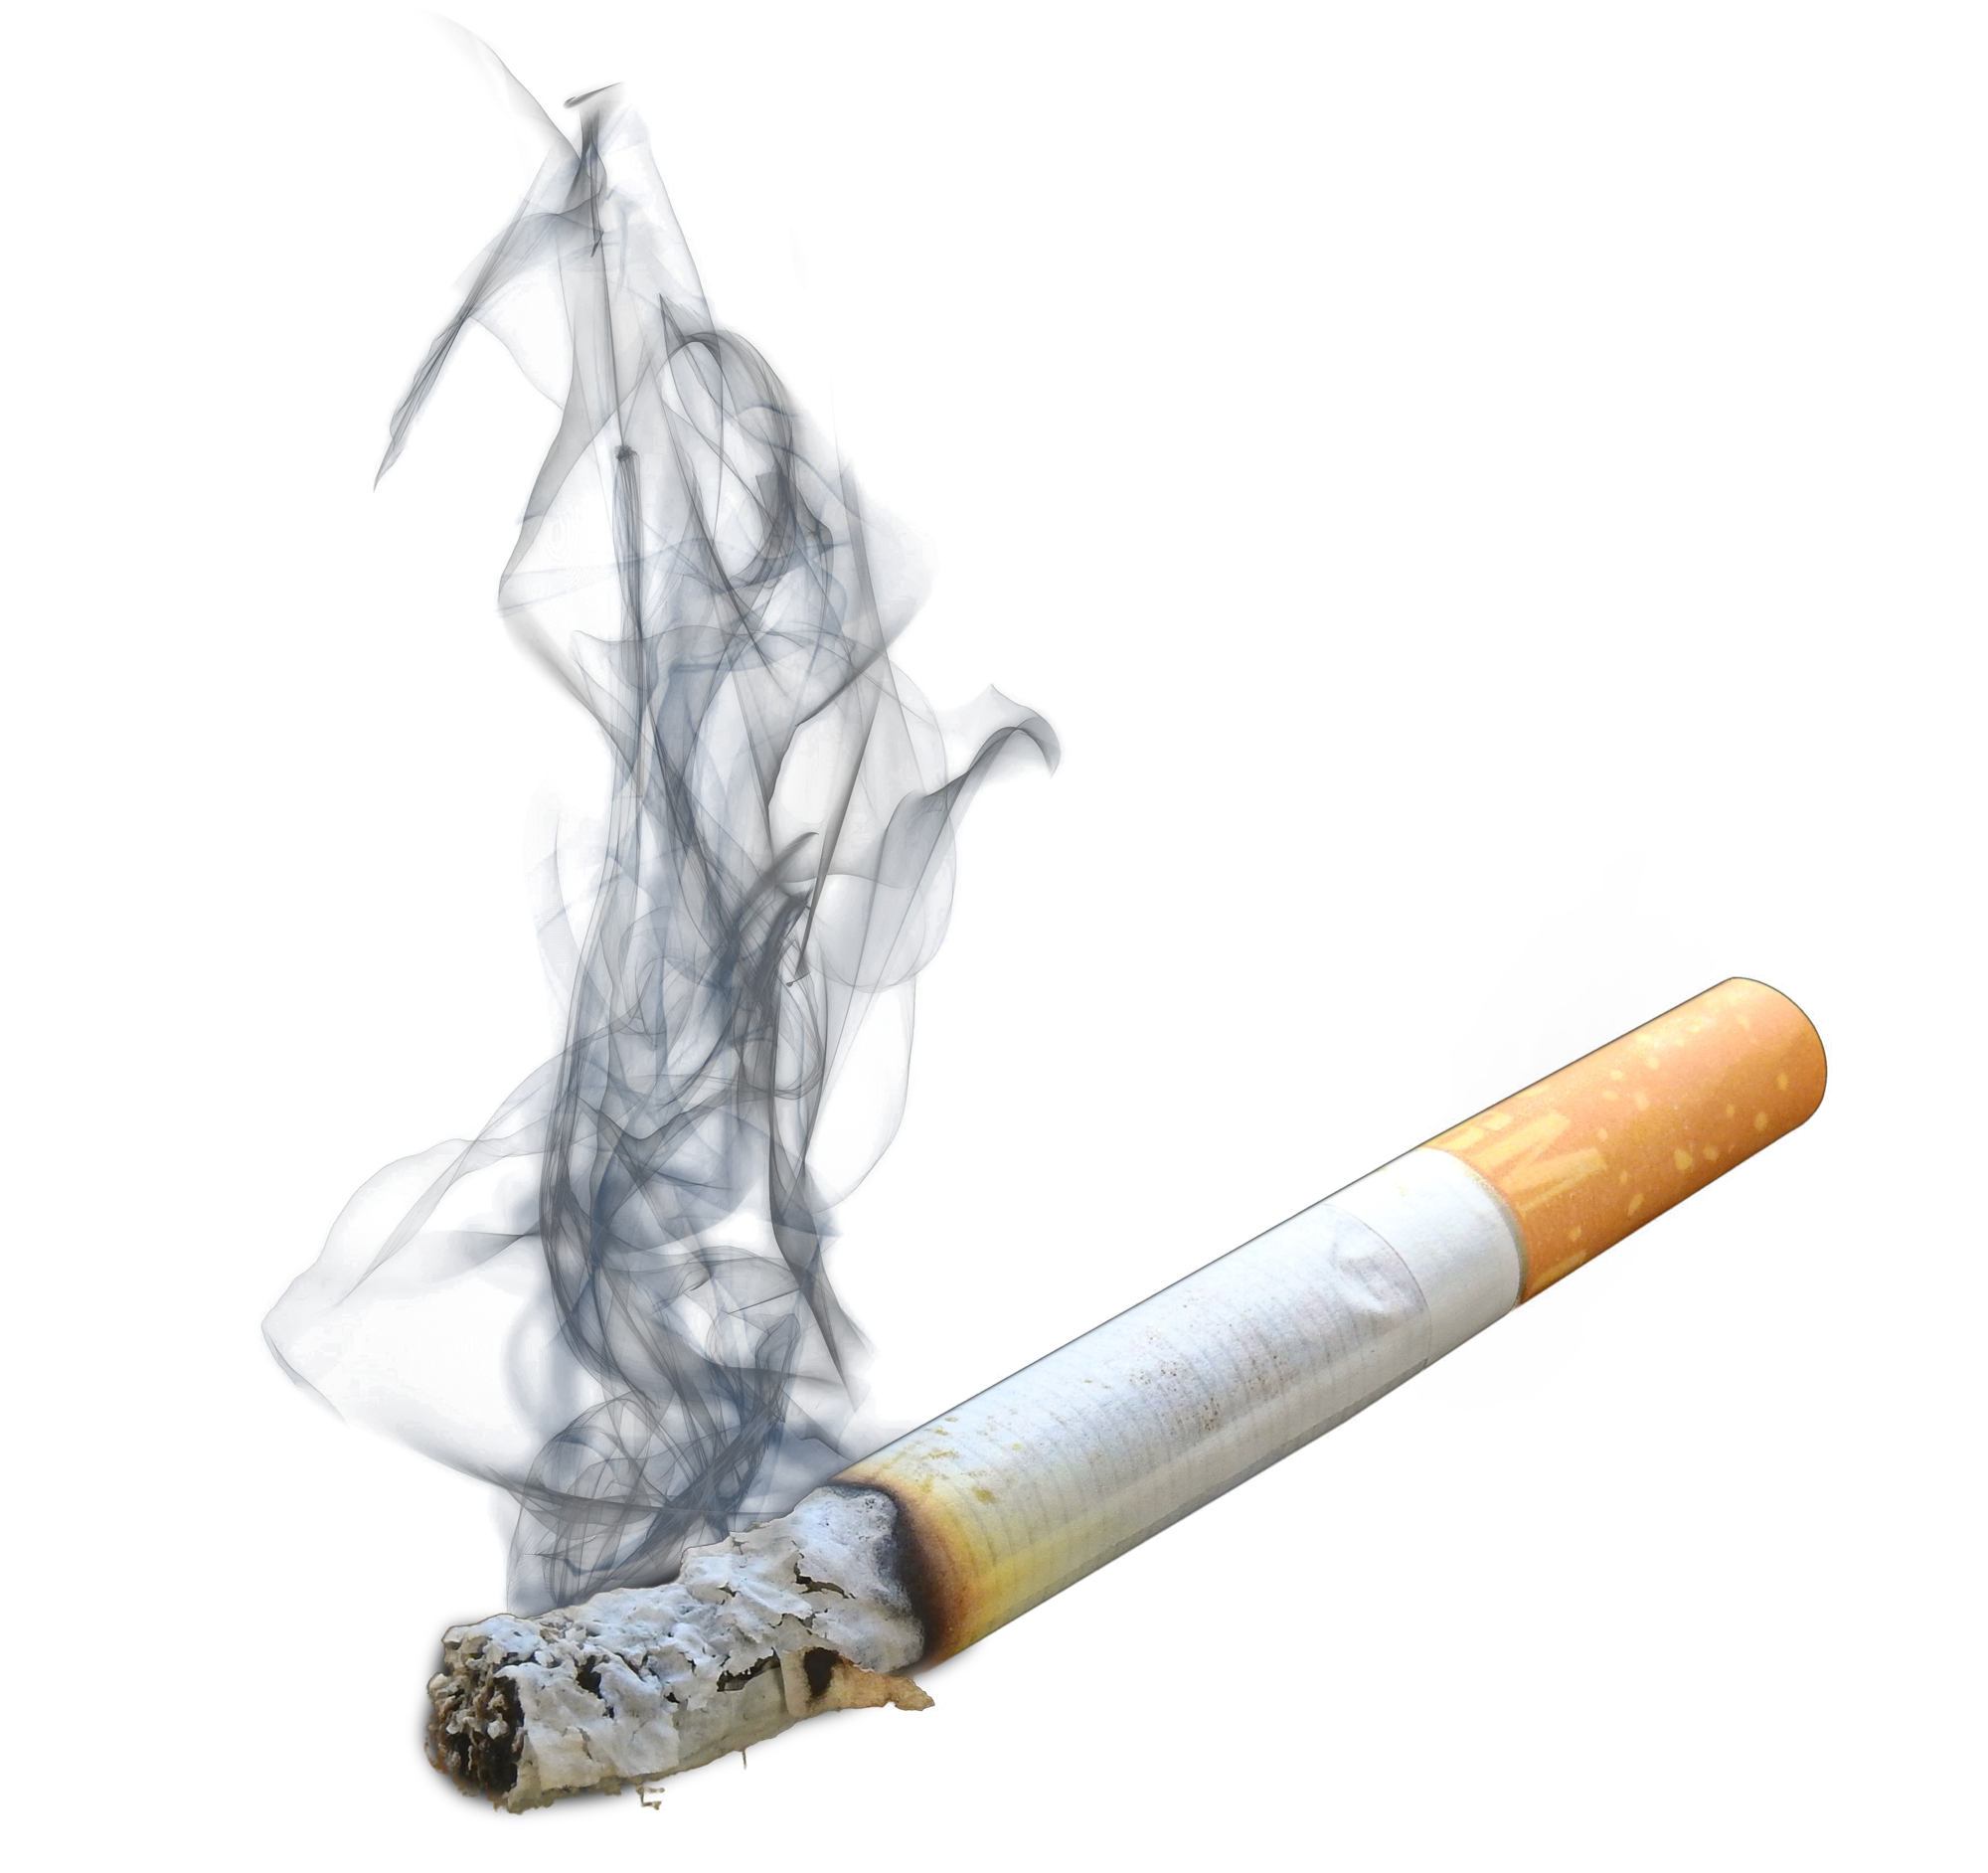 cigarette smoke png